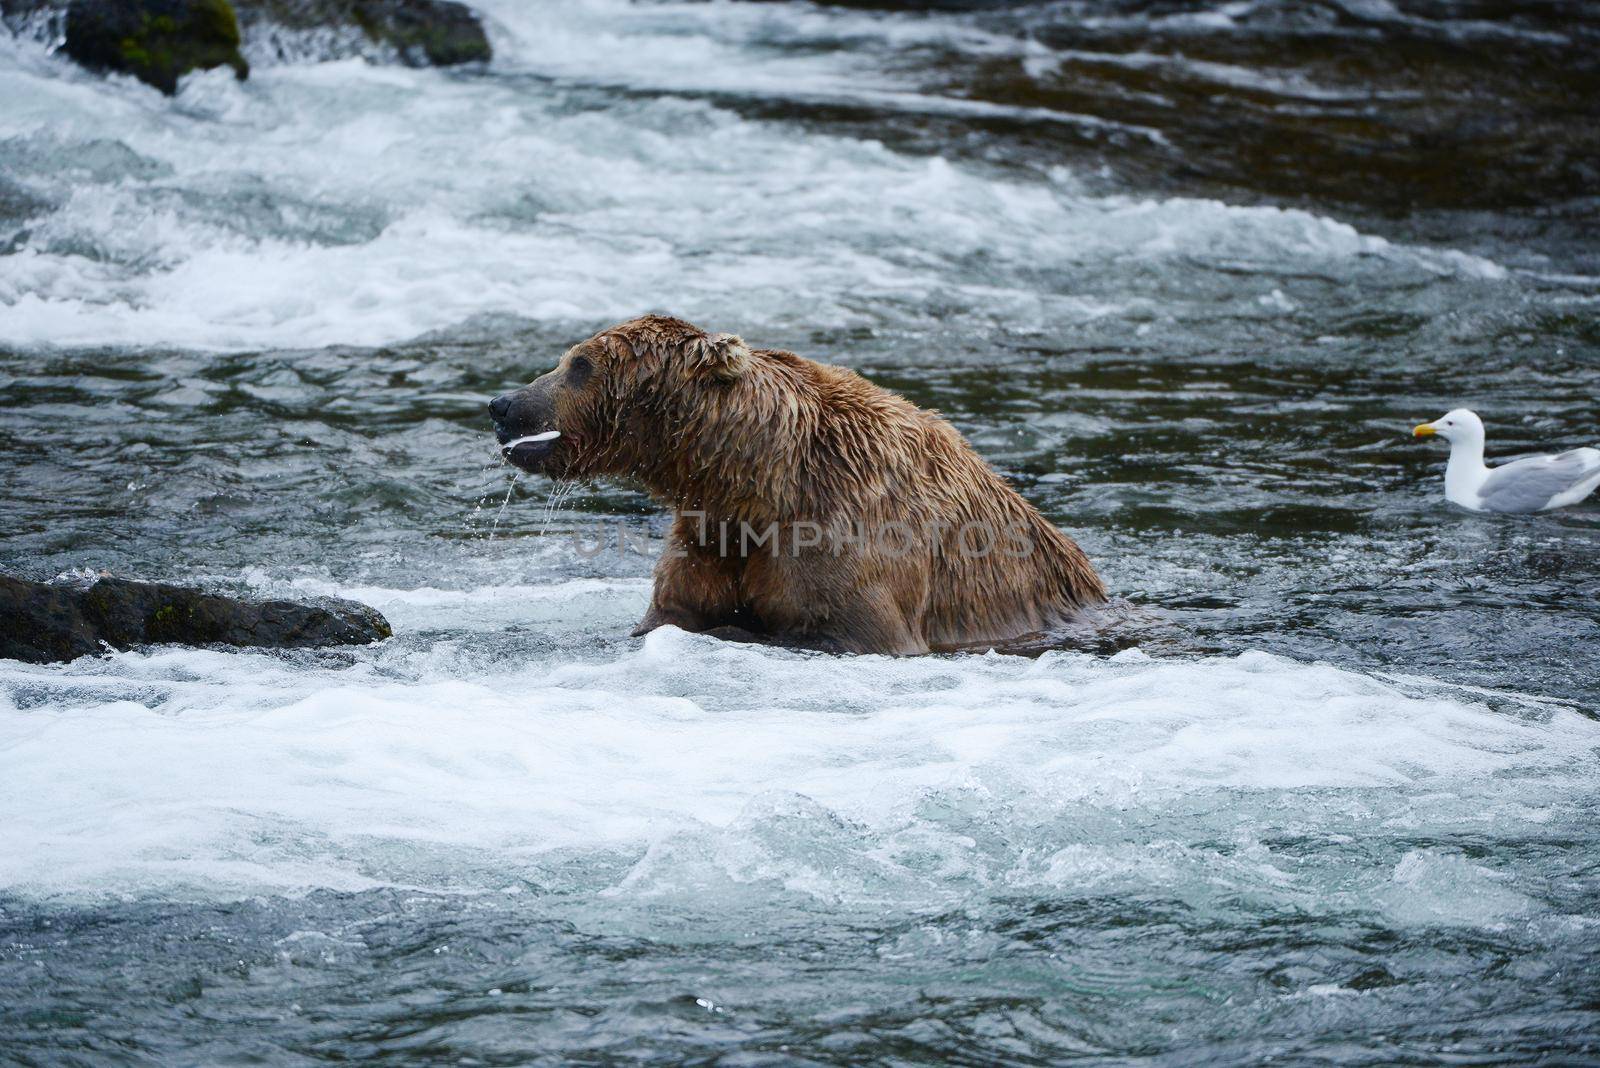 Grizzly bear in Katmai, Alaska